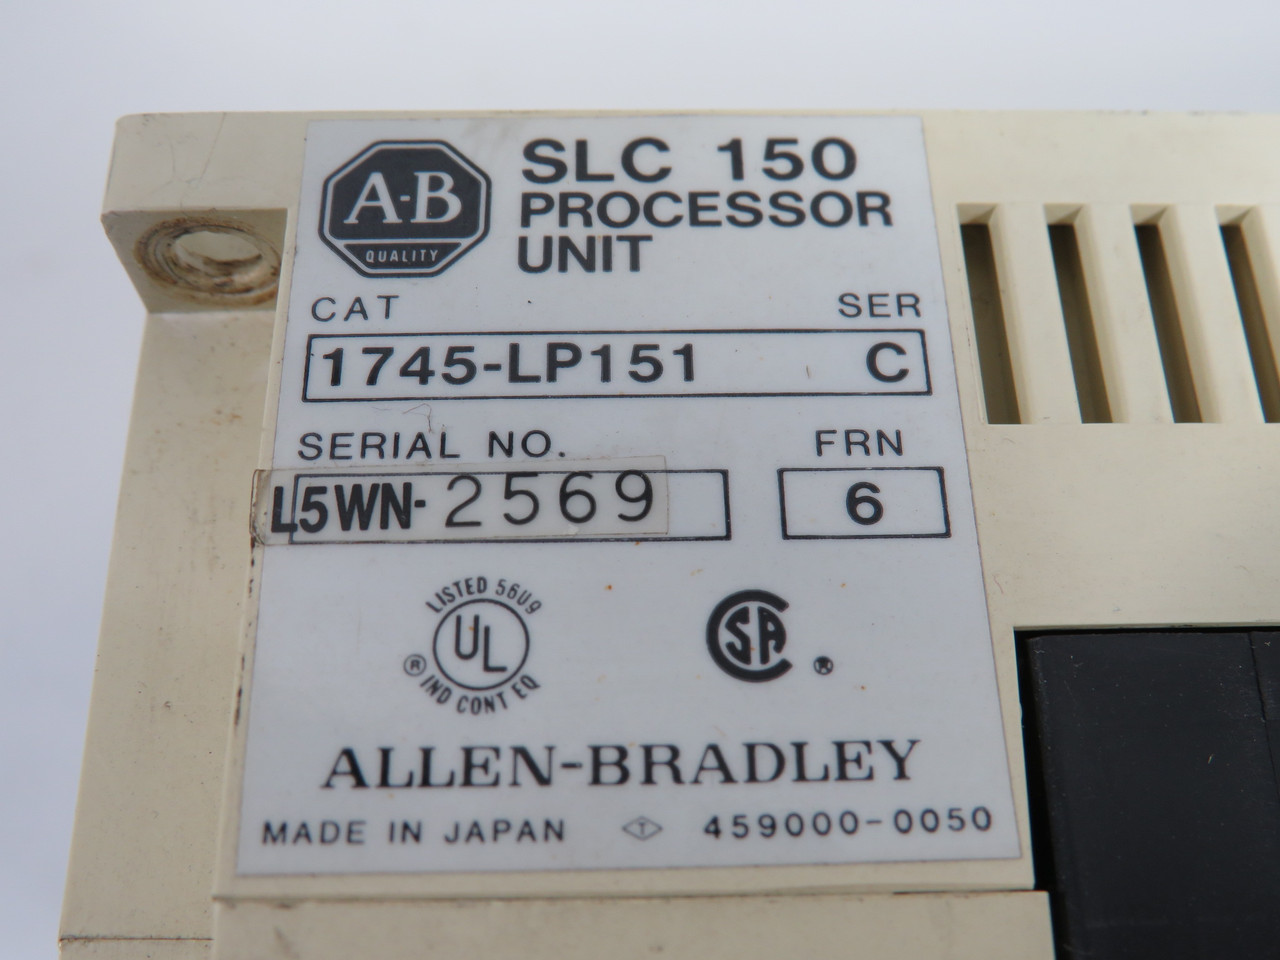 Allen-Bradley 1745-LP151 Series C SLC 150 Processor FRN 6 DAMAGED MOUNTS USED